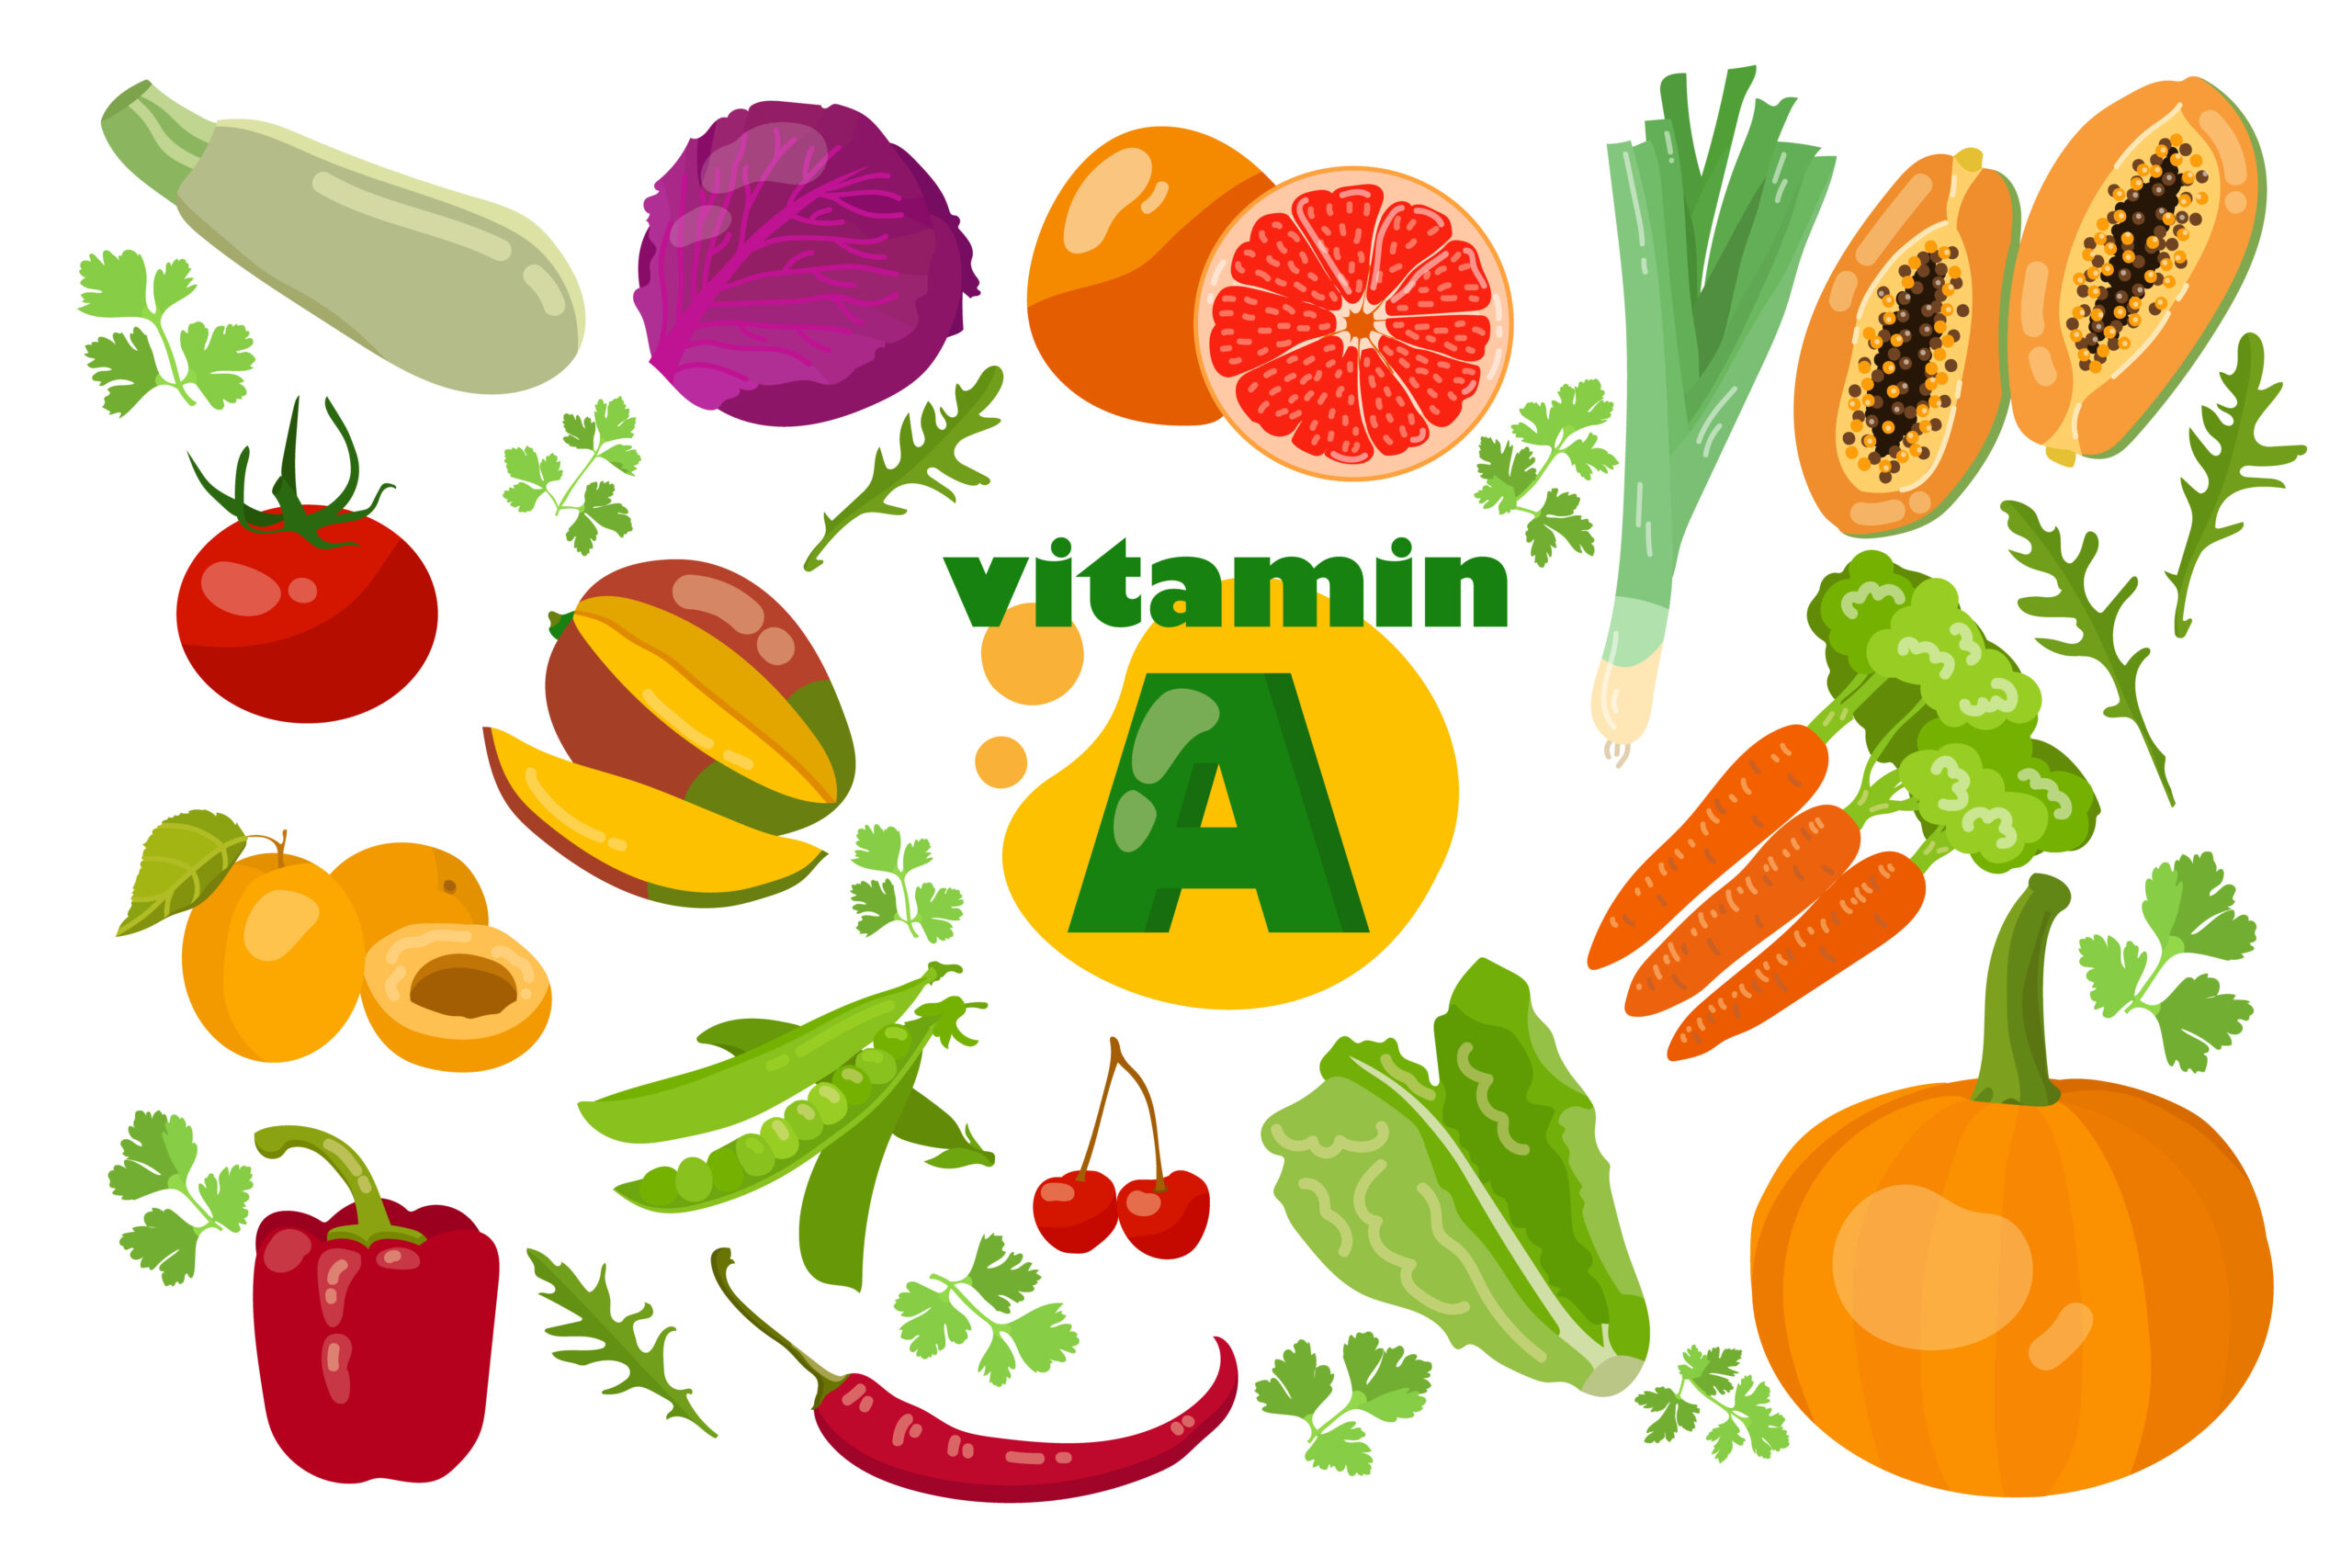 Vitamine A : les 15 principales sources